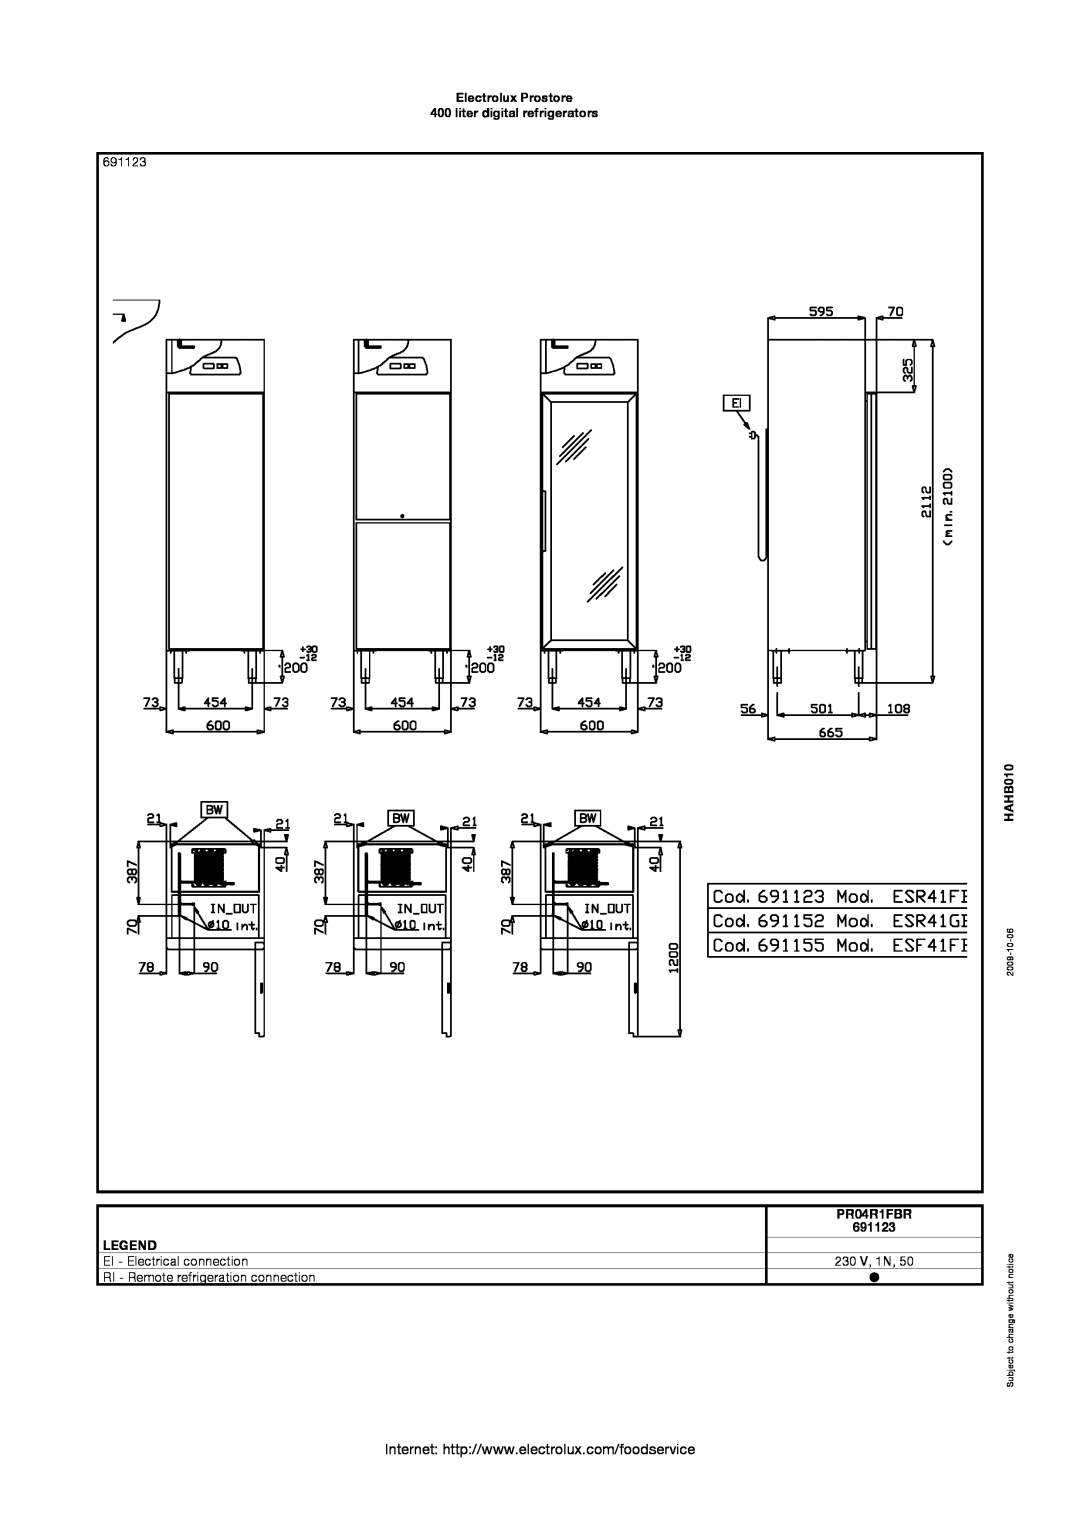 Electrolux 691216, 691213 manual Electrolux Prostore 400 liter digital refrigerators, HAHB010, PR04R1FBR, 691123, 2009-10-06 